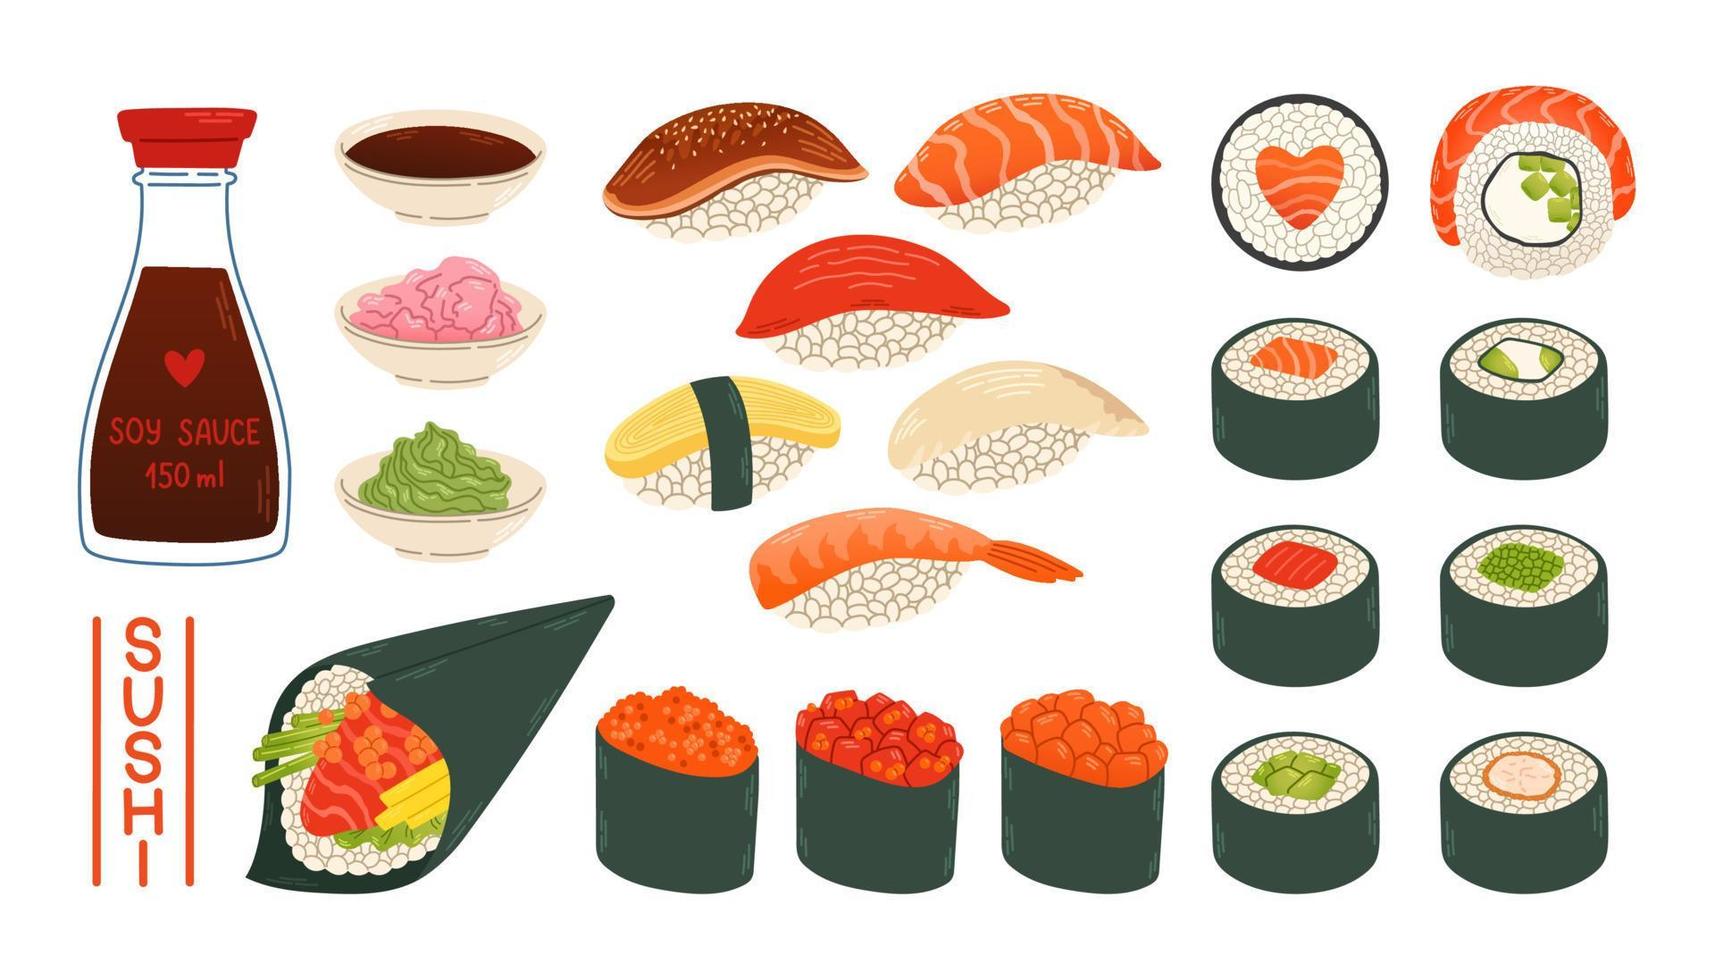 sushi rollen gunkan temaki sojasauce ingwer wasabi set japan asiatisches essen vektor logo design pack isoliert